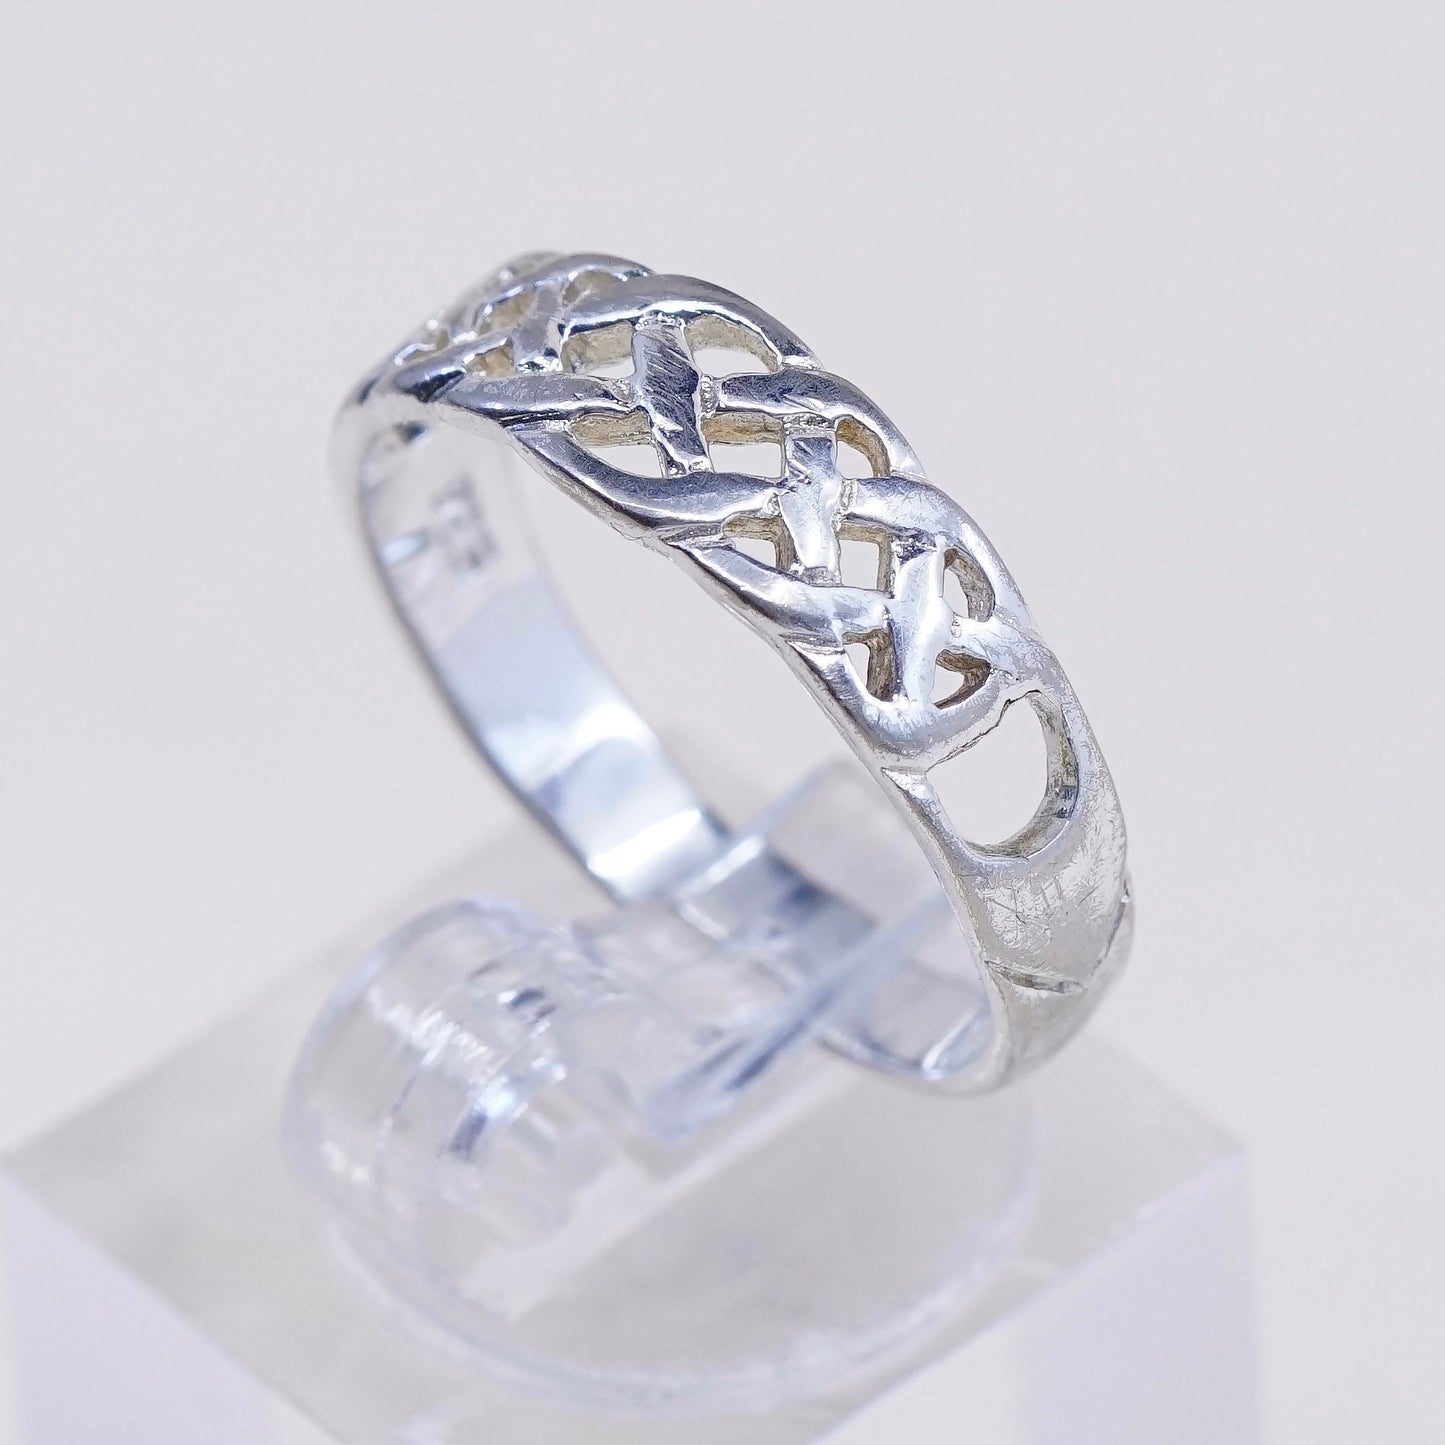 Size 8.25, vintage sterling silver handmade ring, 925 filigree band